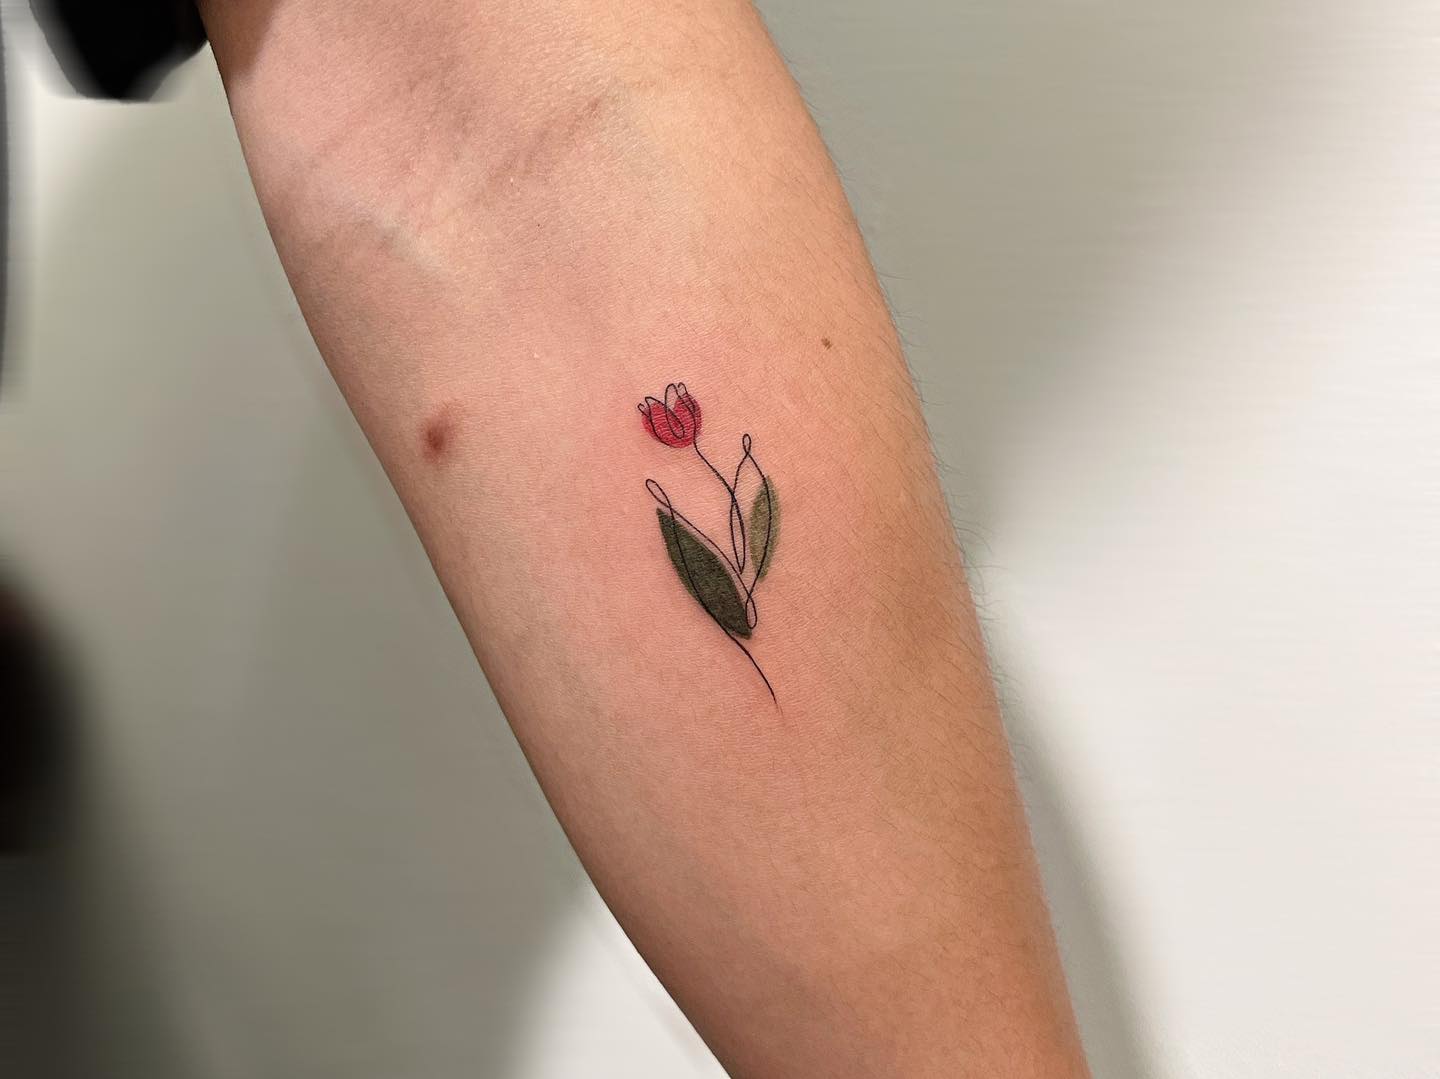 10 Flower Stem Tattoo Ideas That Will Blow Your Mind!

+2023